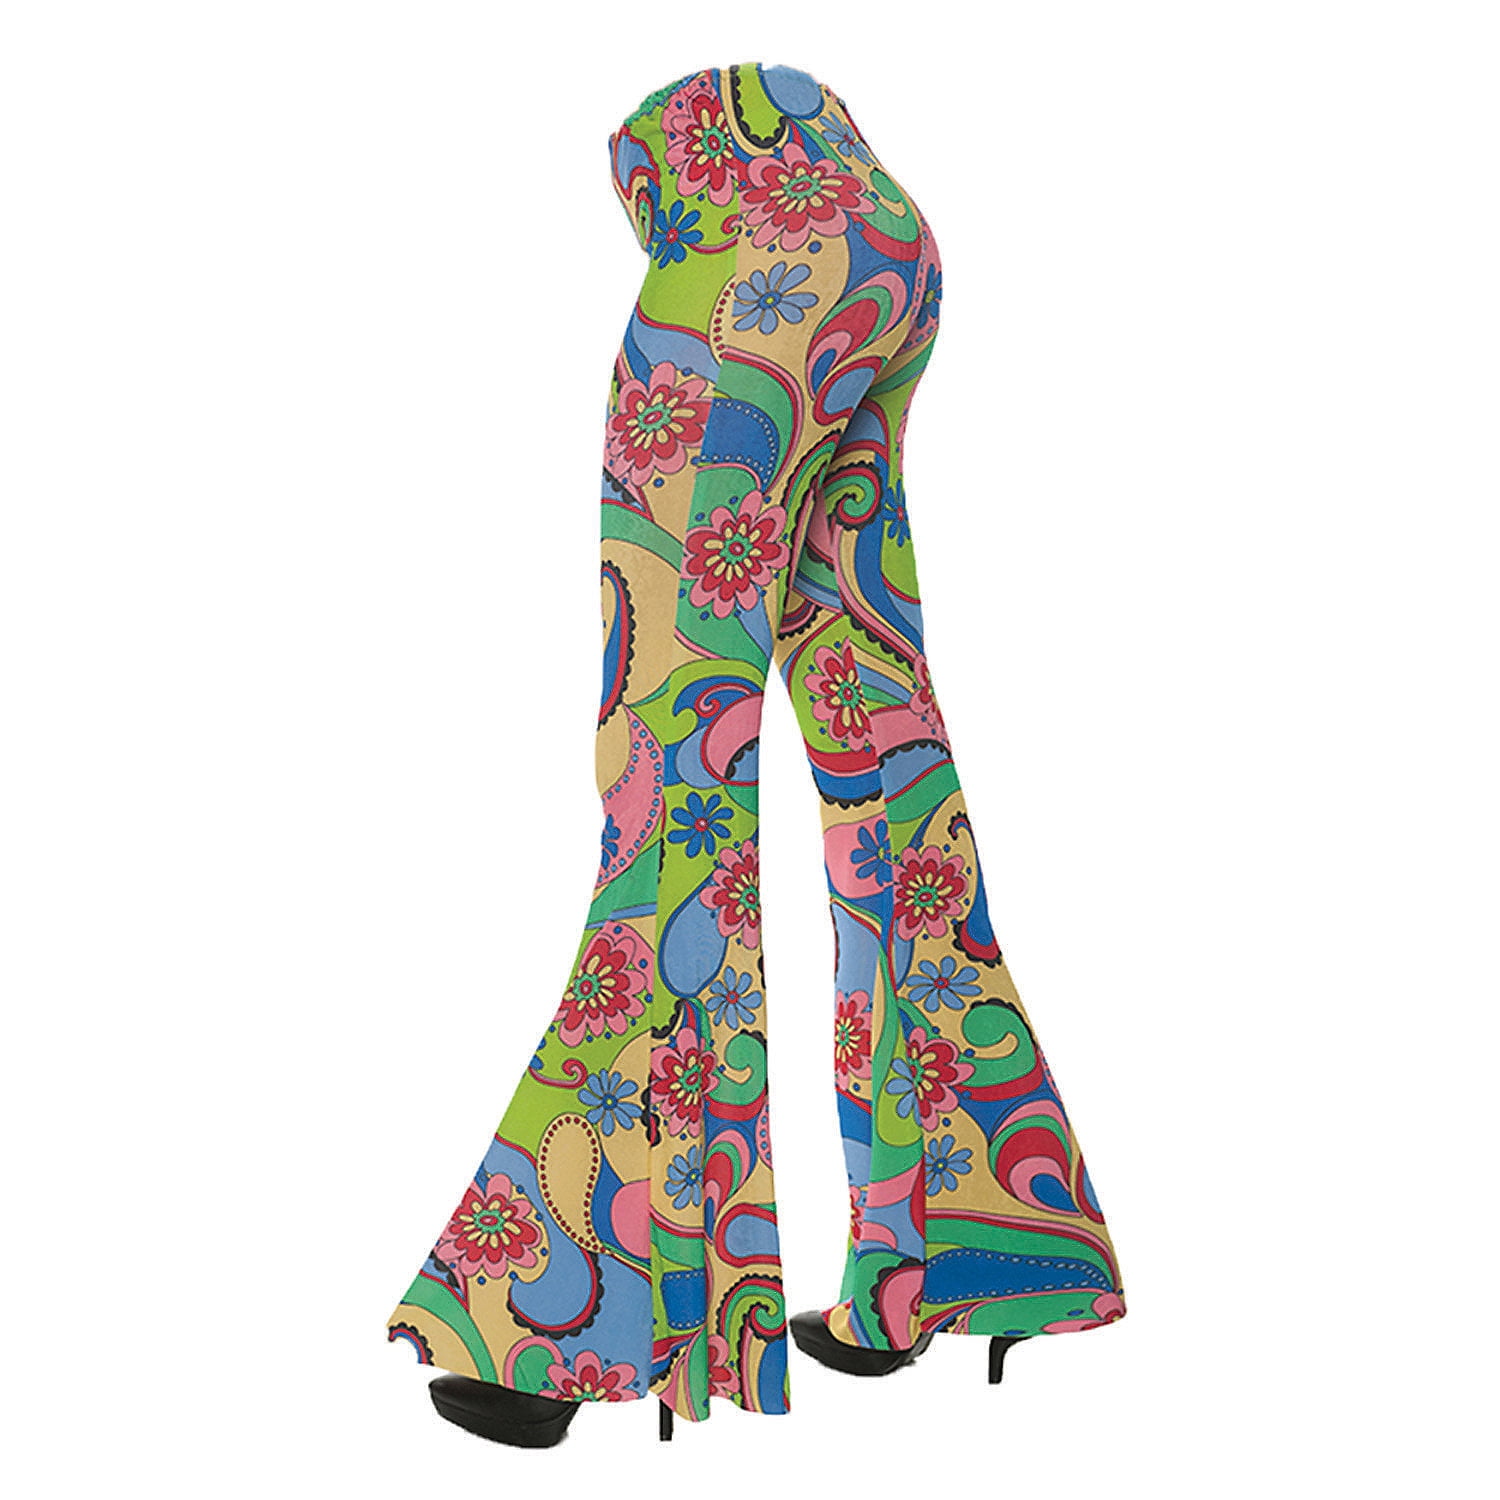 Underwraps Womens 70s Flower Bell Bottom Pants Costume - Size X Large